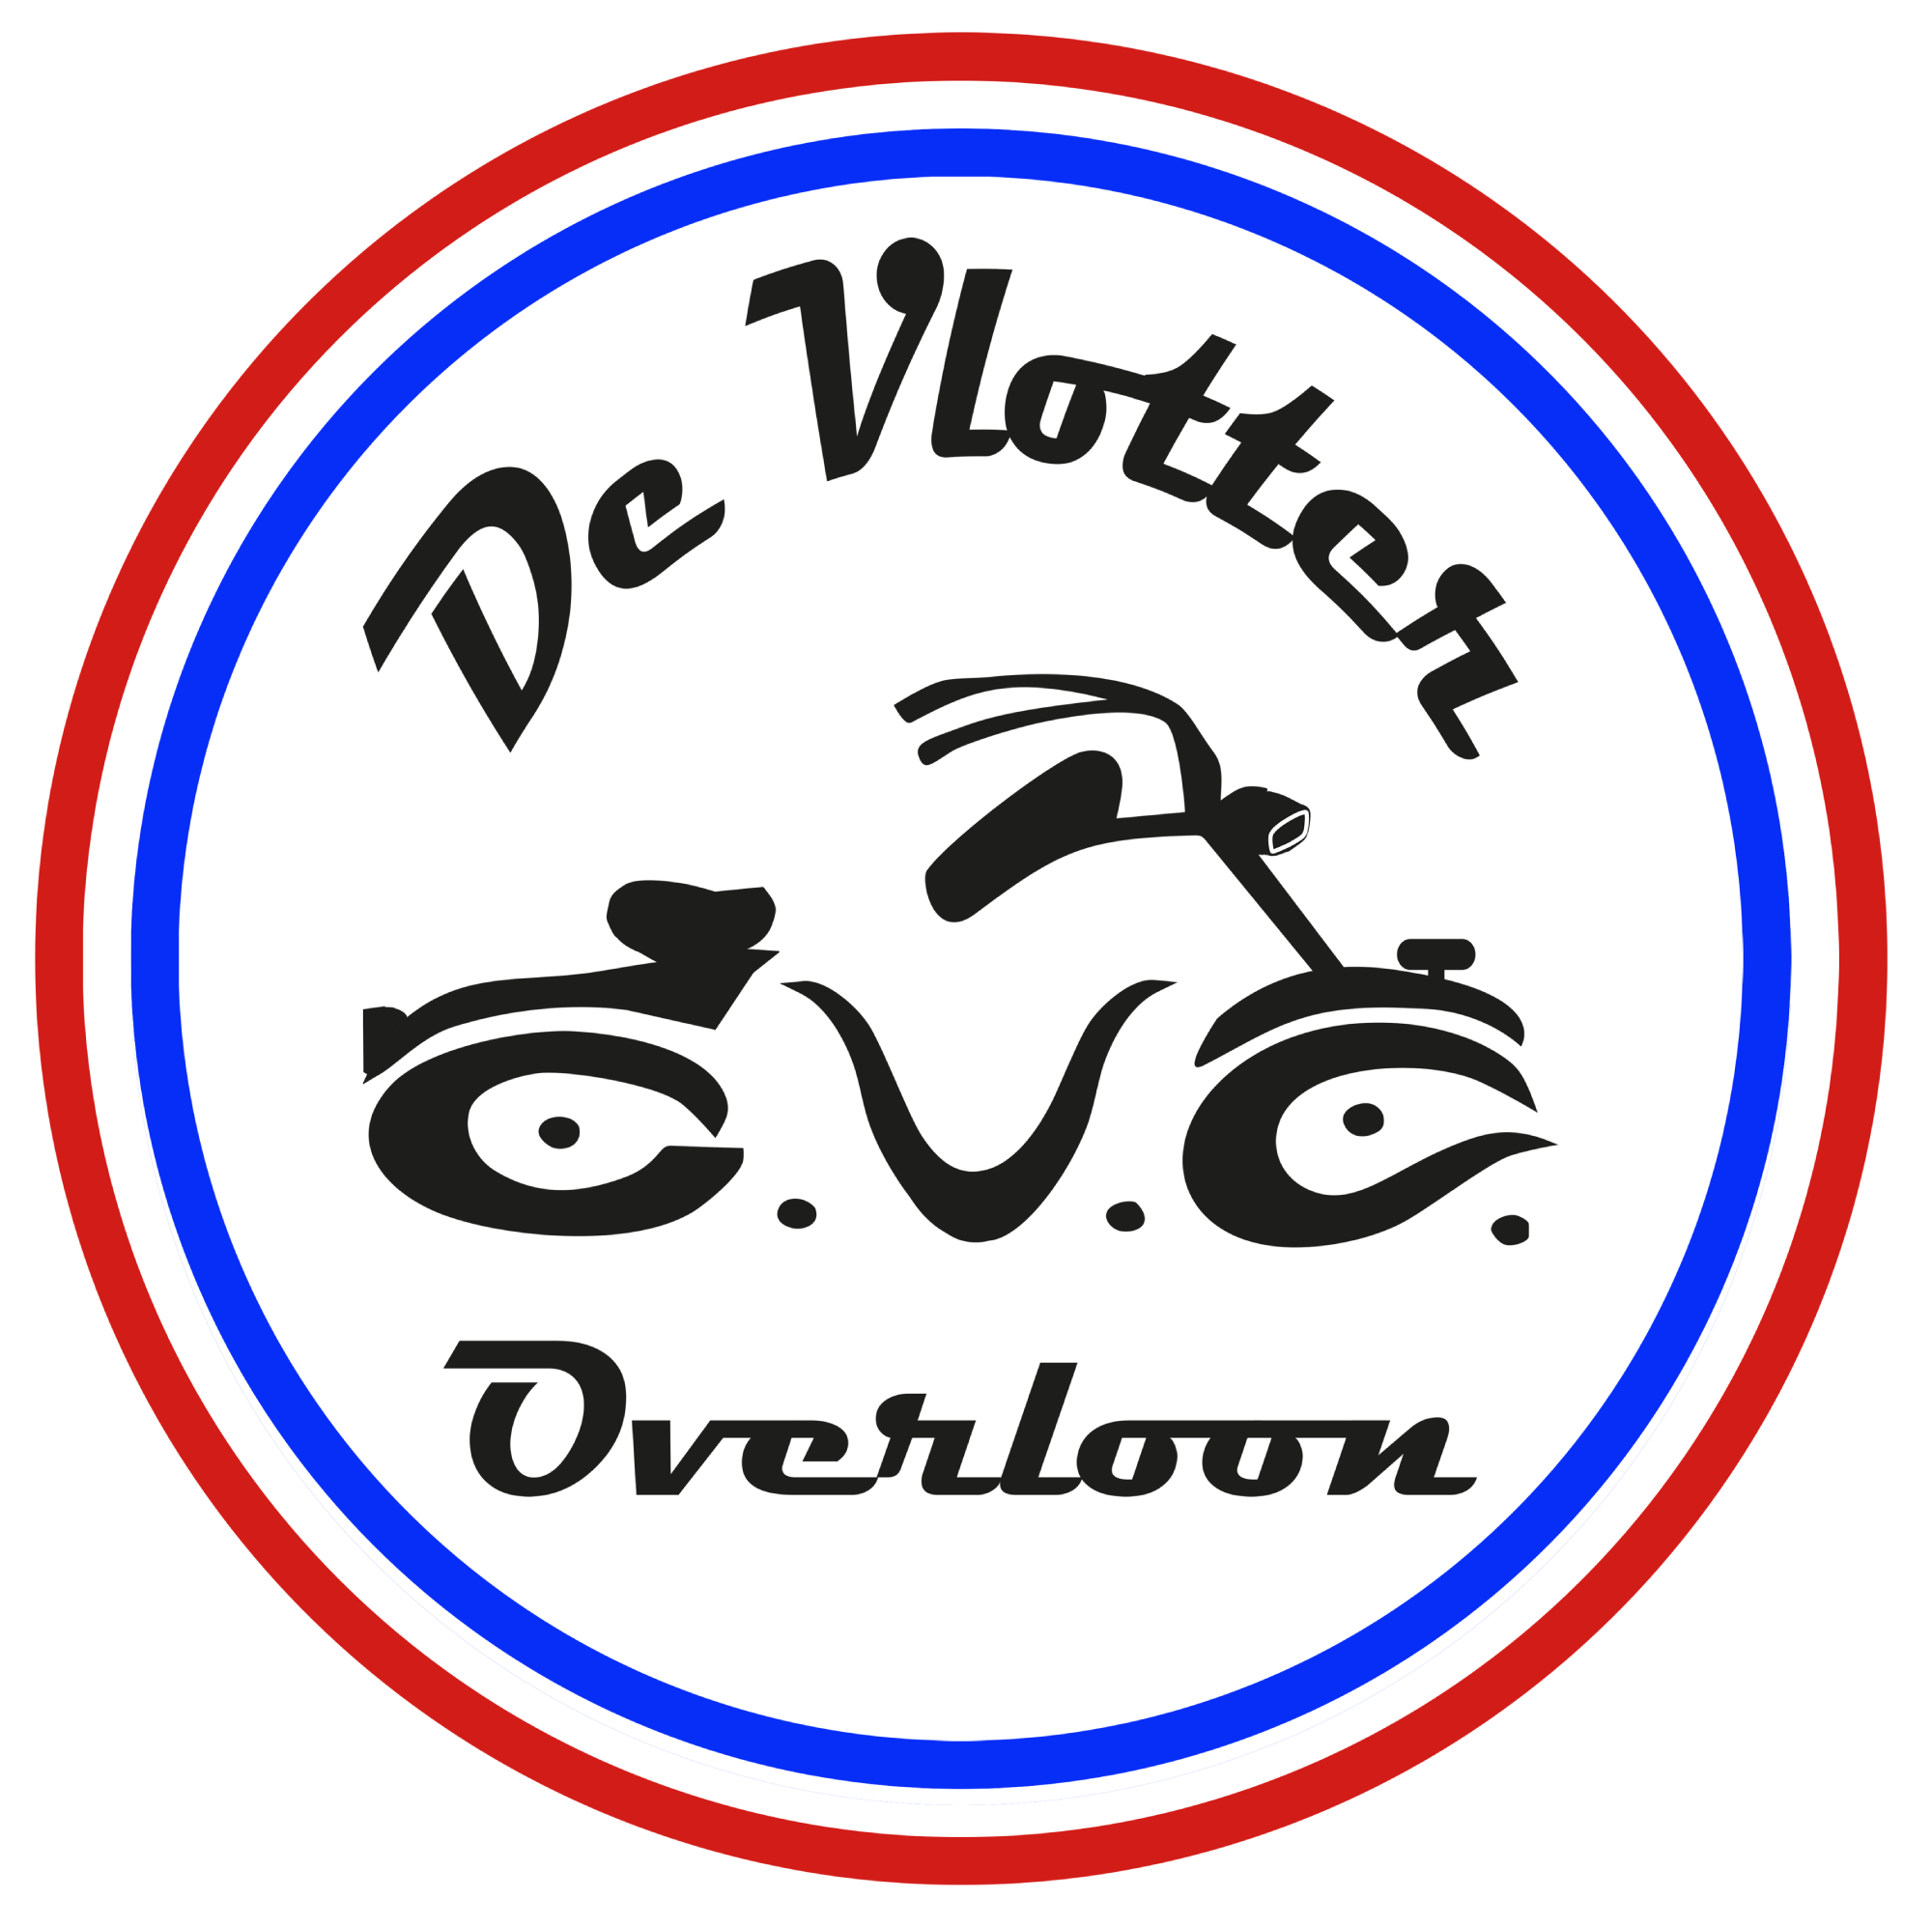 Logo van "De Vlotter"